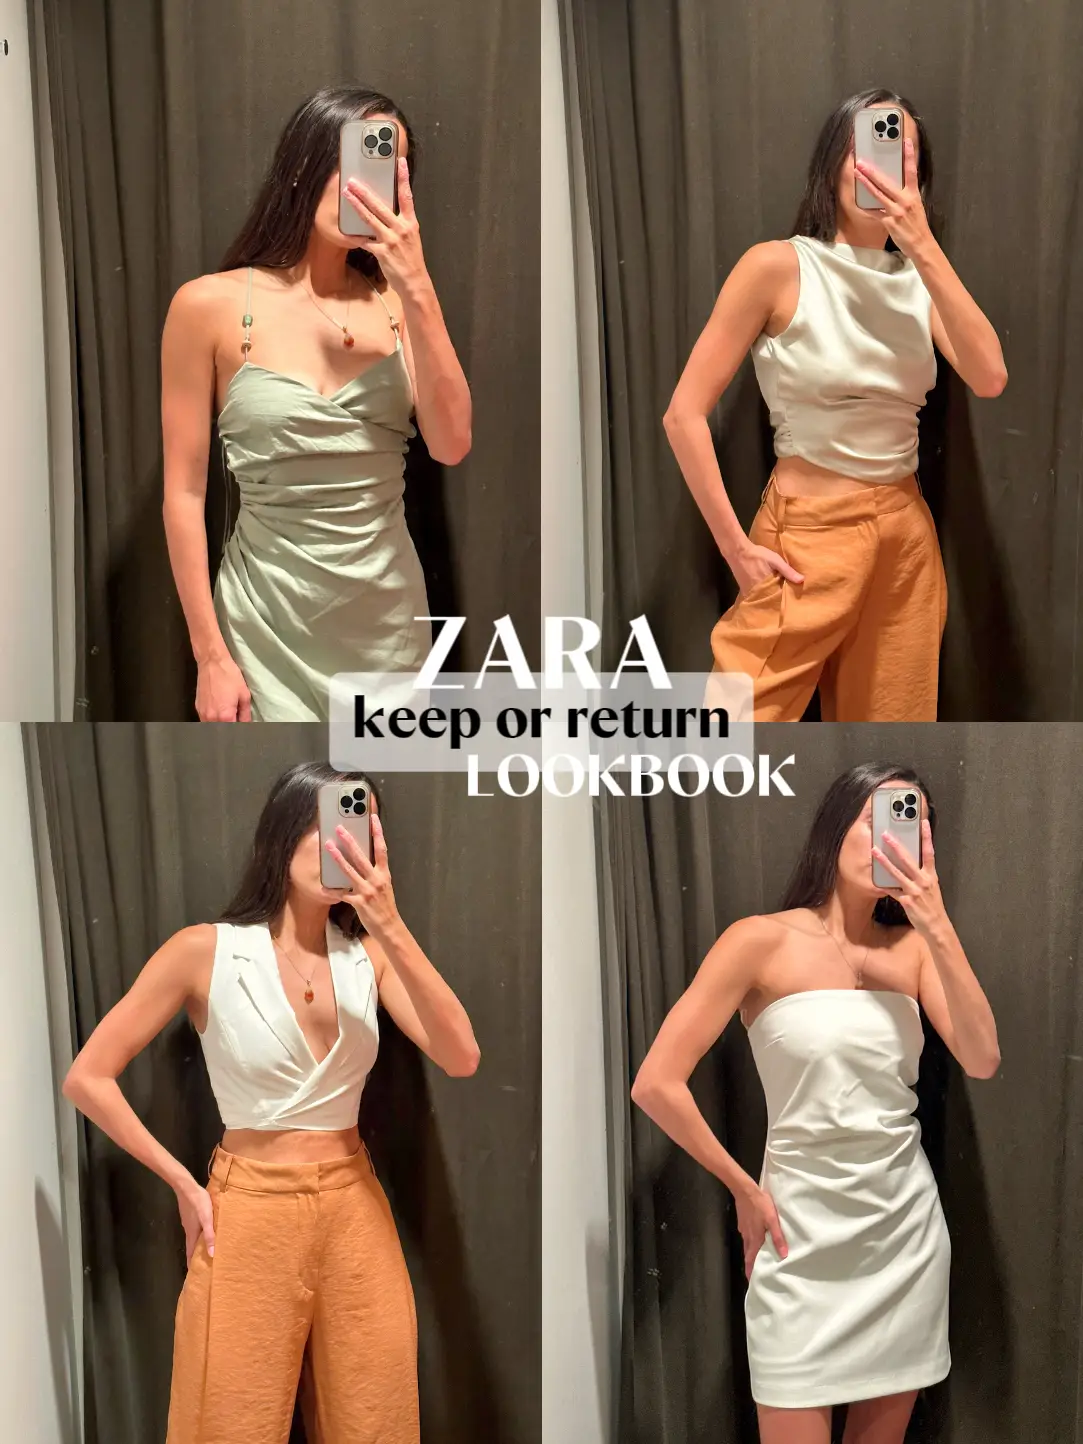 Perfect fitting Zara bodysuit 🤍, Gallery posted by ambermaylowe